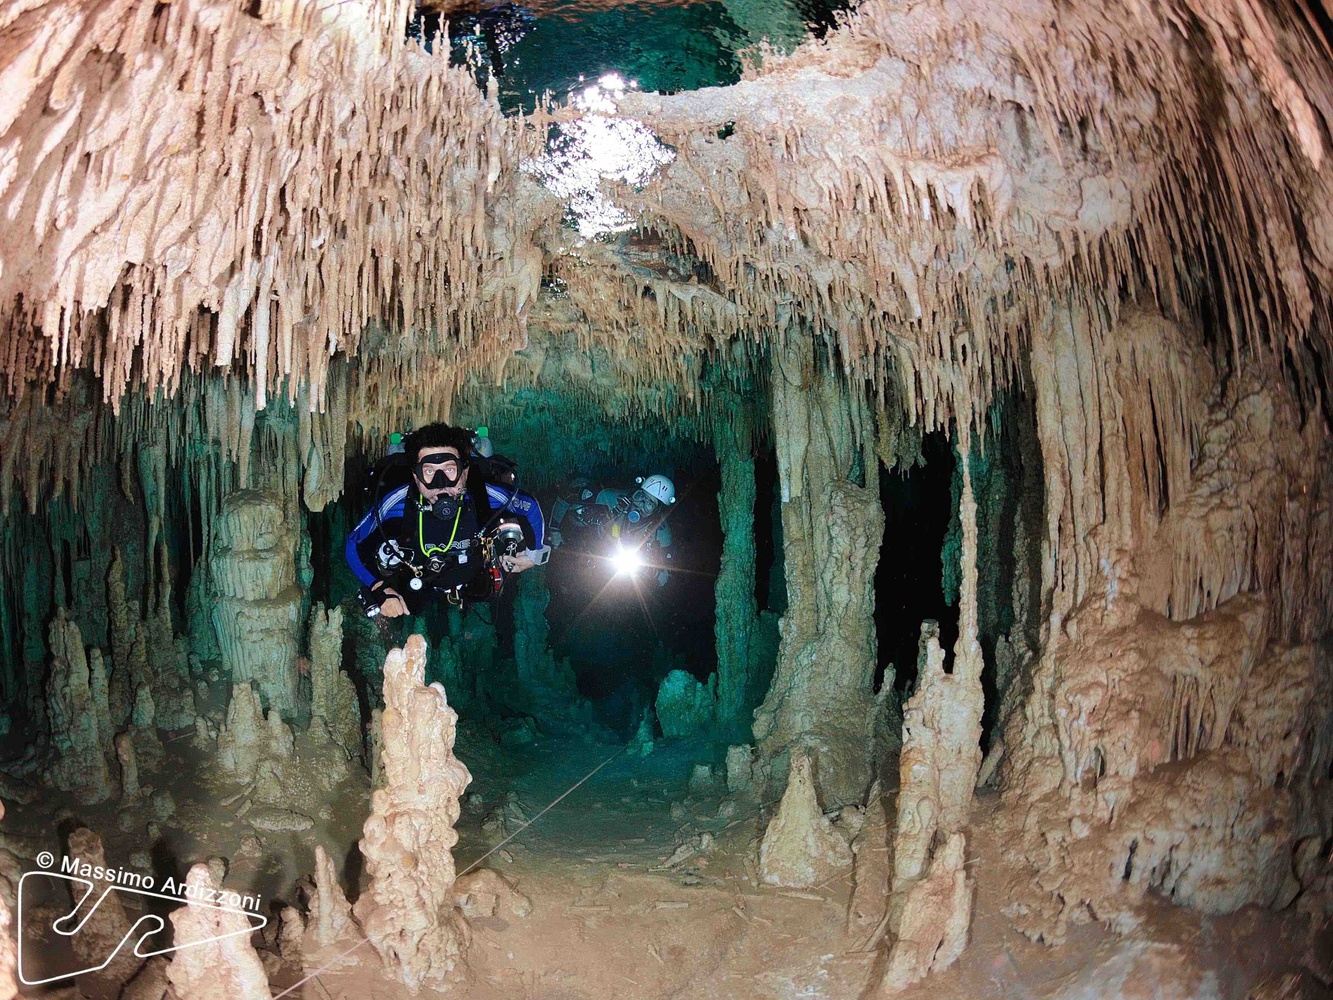 Dives in the magical cenotes of Riviera Maya